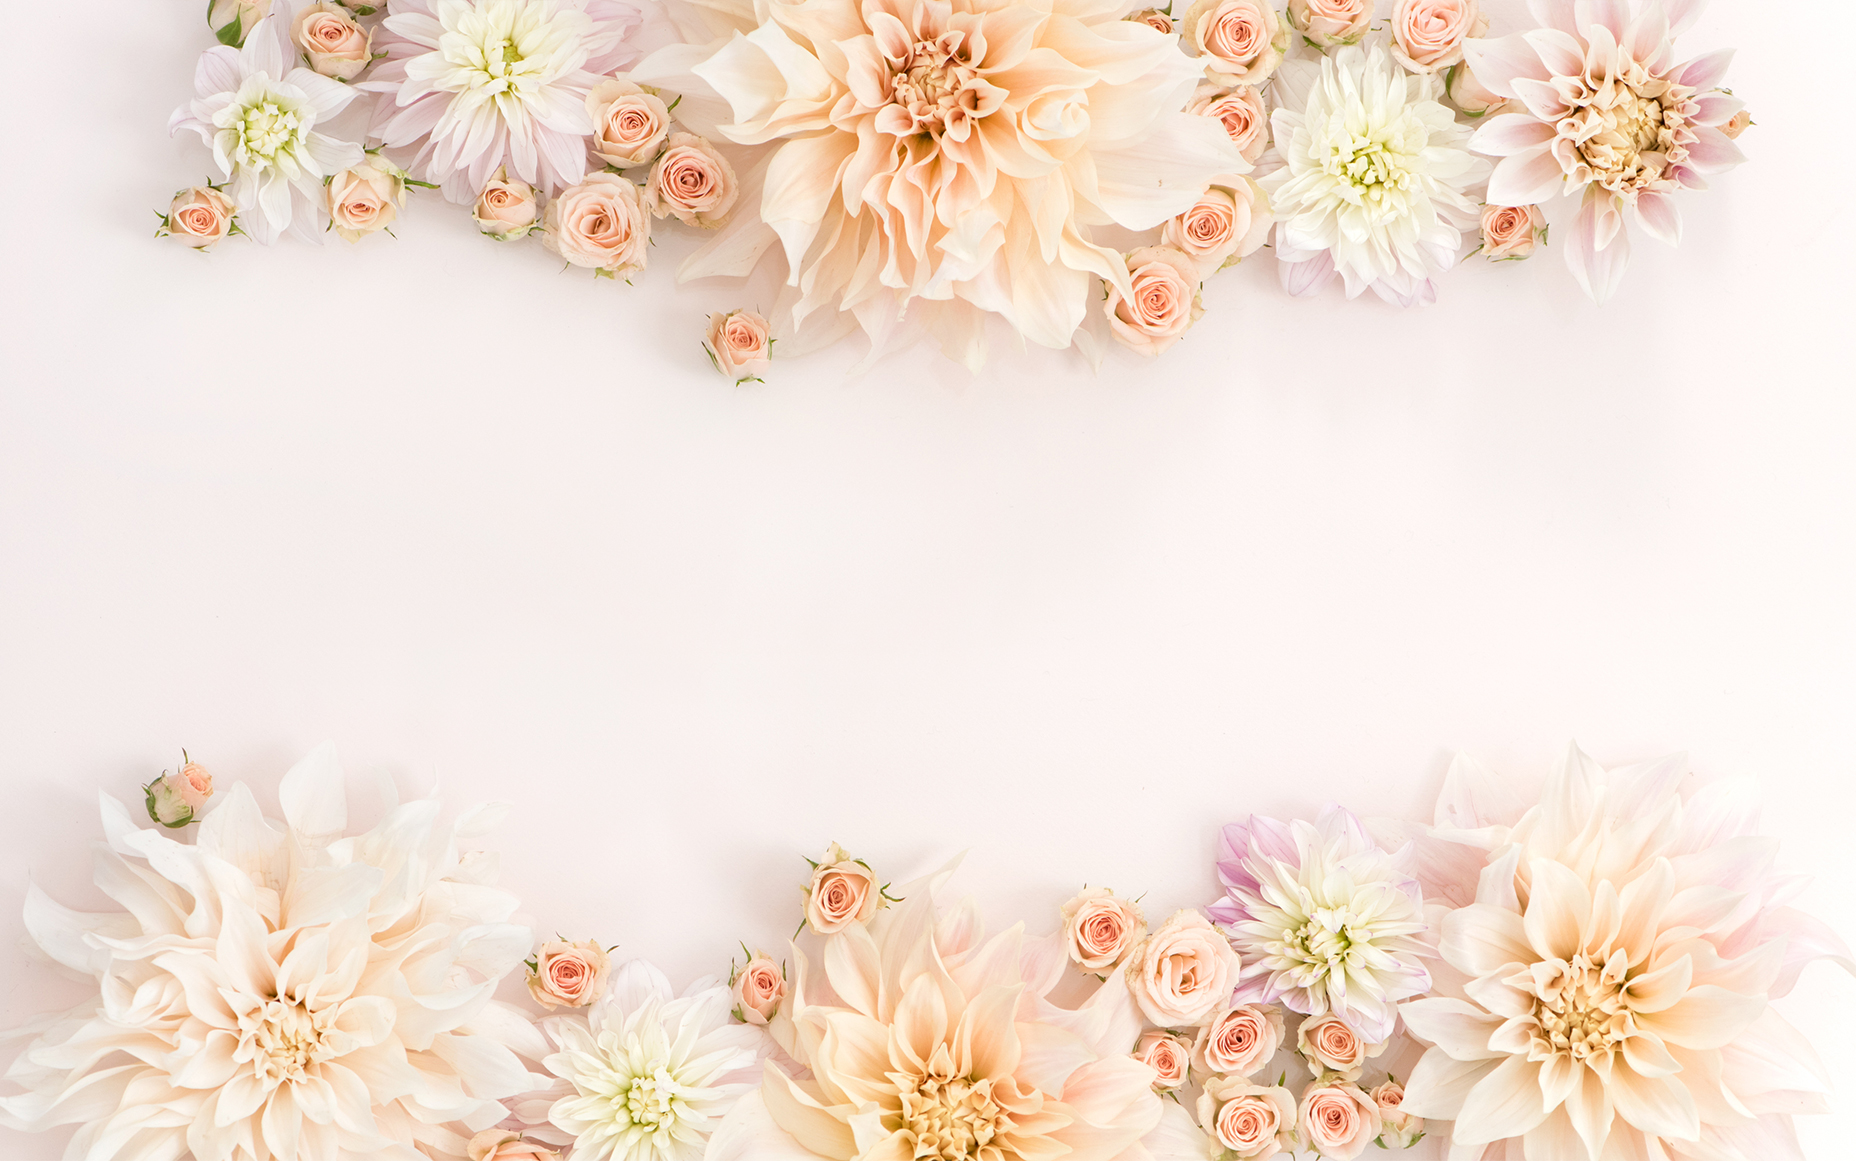 khalid name wallpaper,rosa,blütenblatt,frühling,blume,pflanze